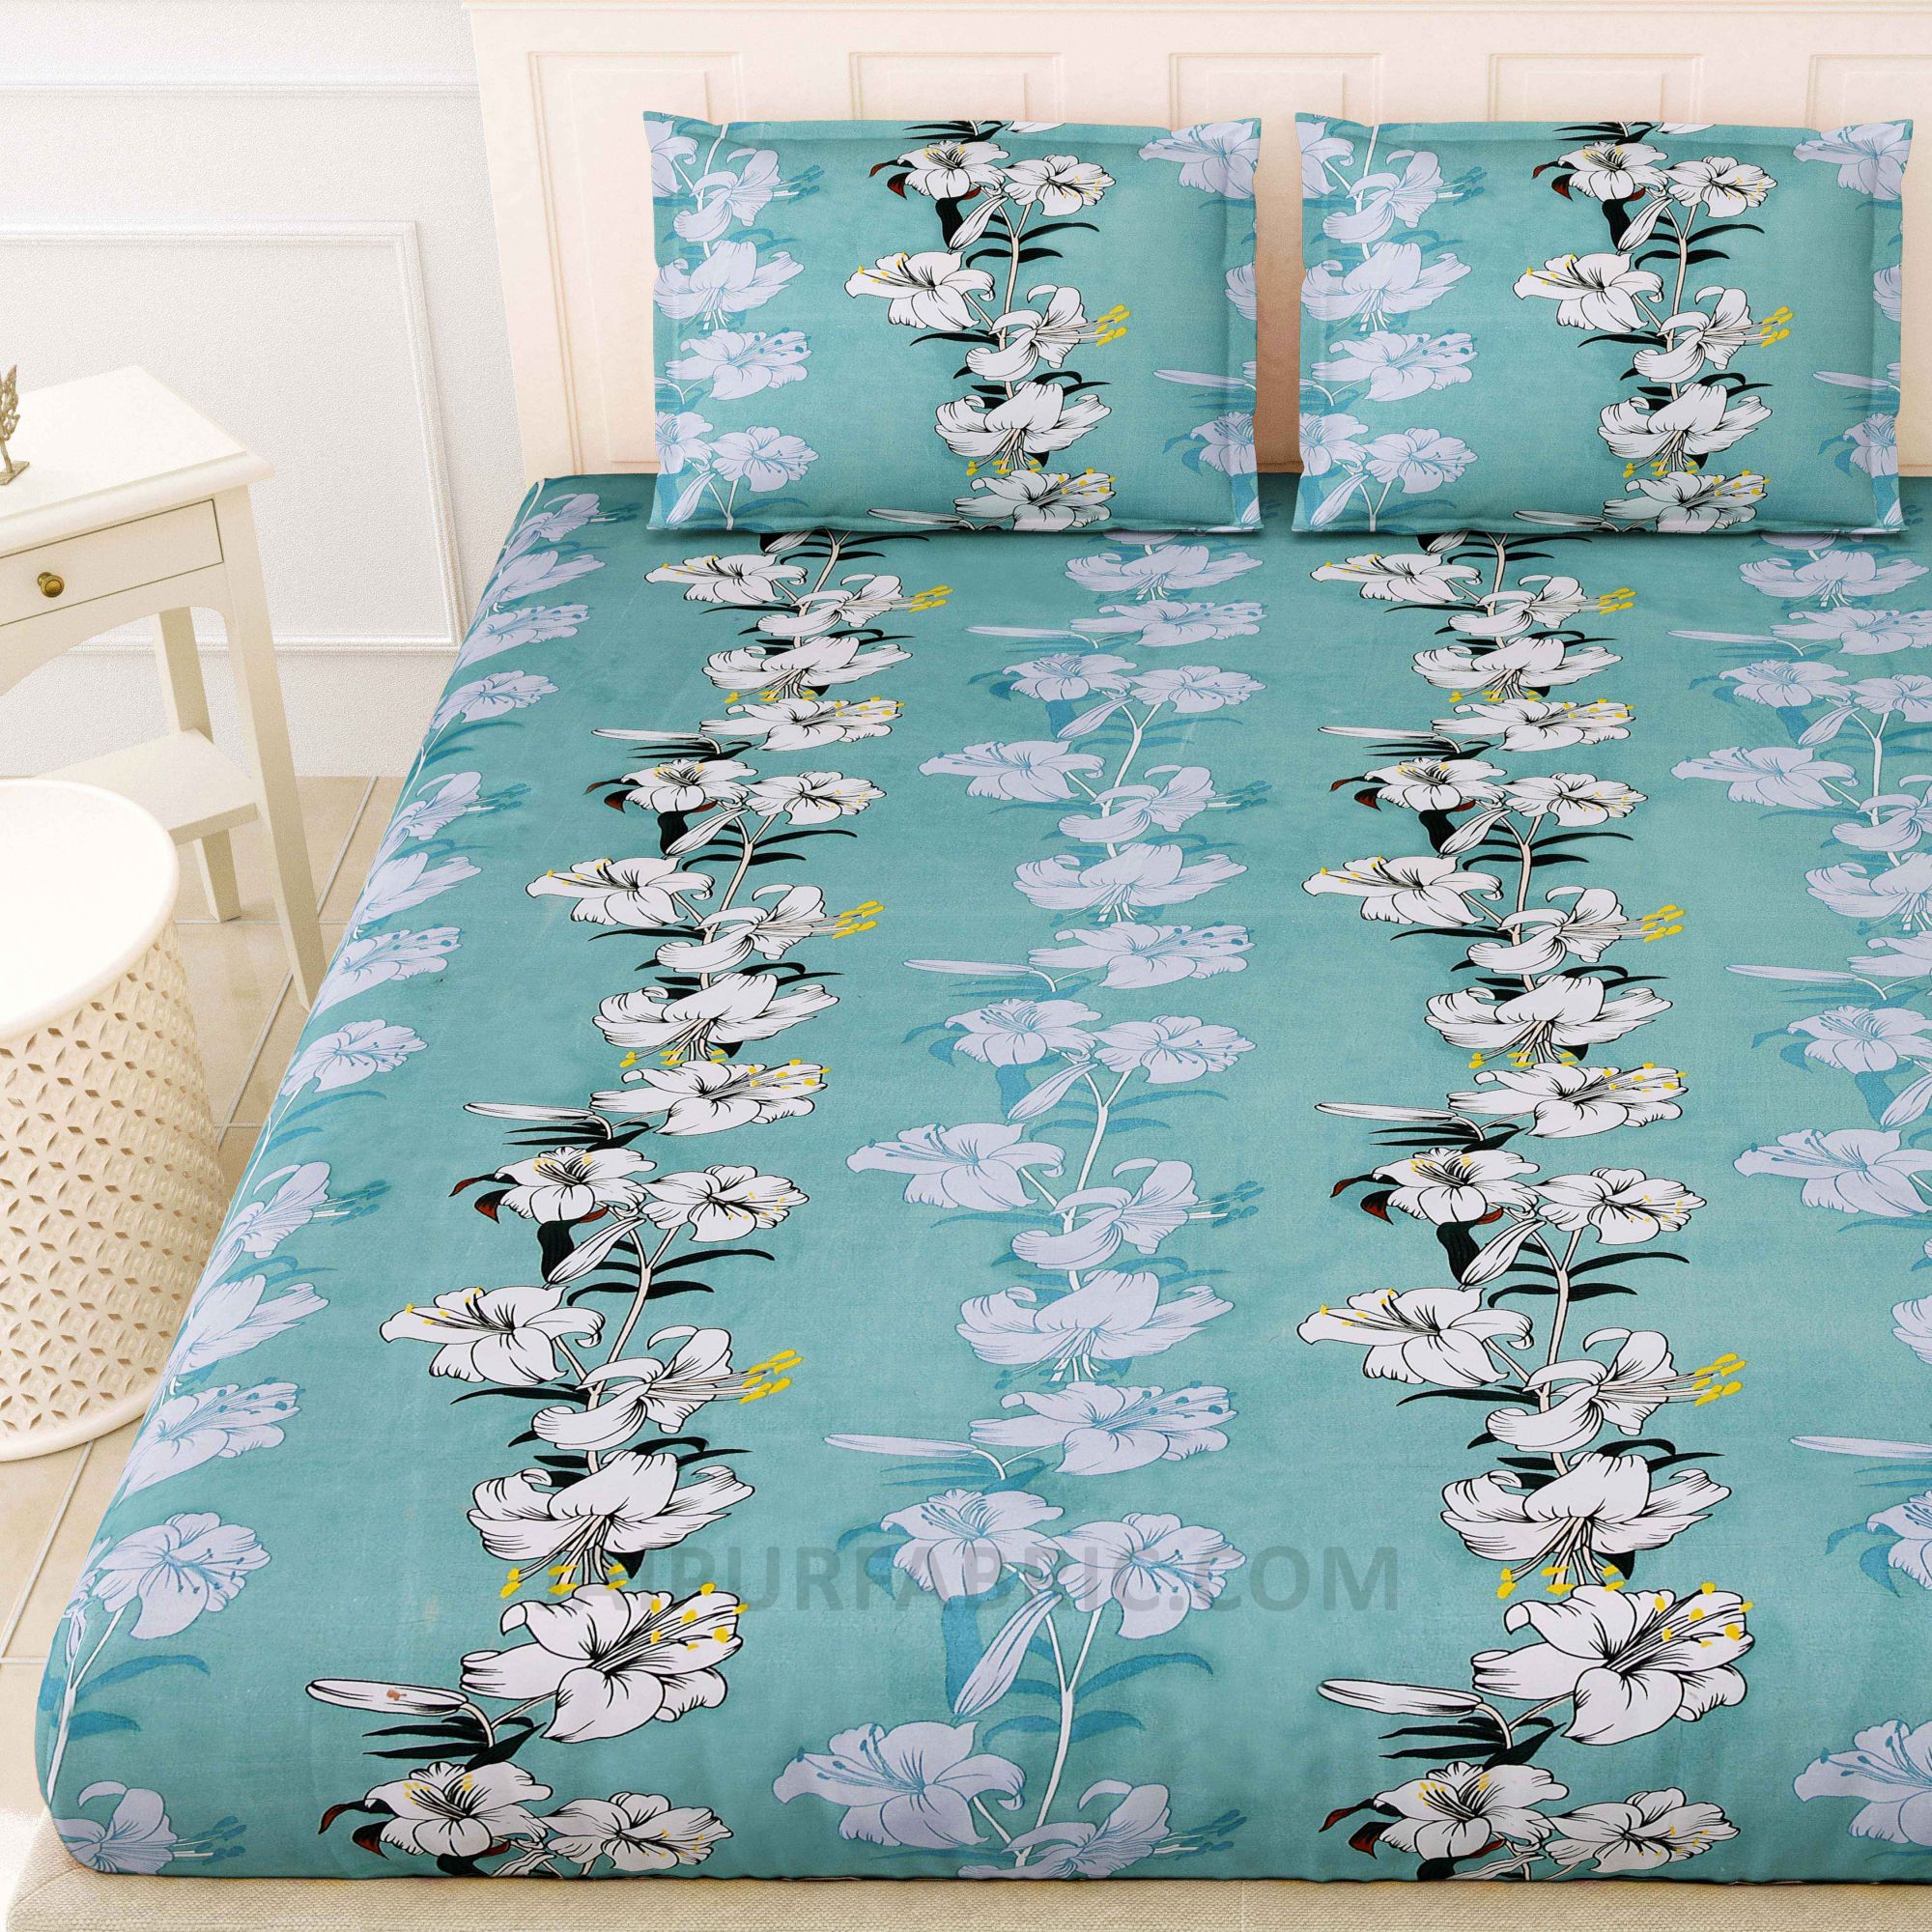 Seagreen Aquatic King Size Bedsheet